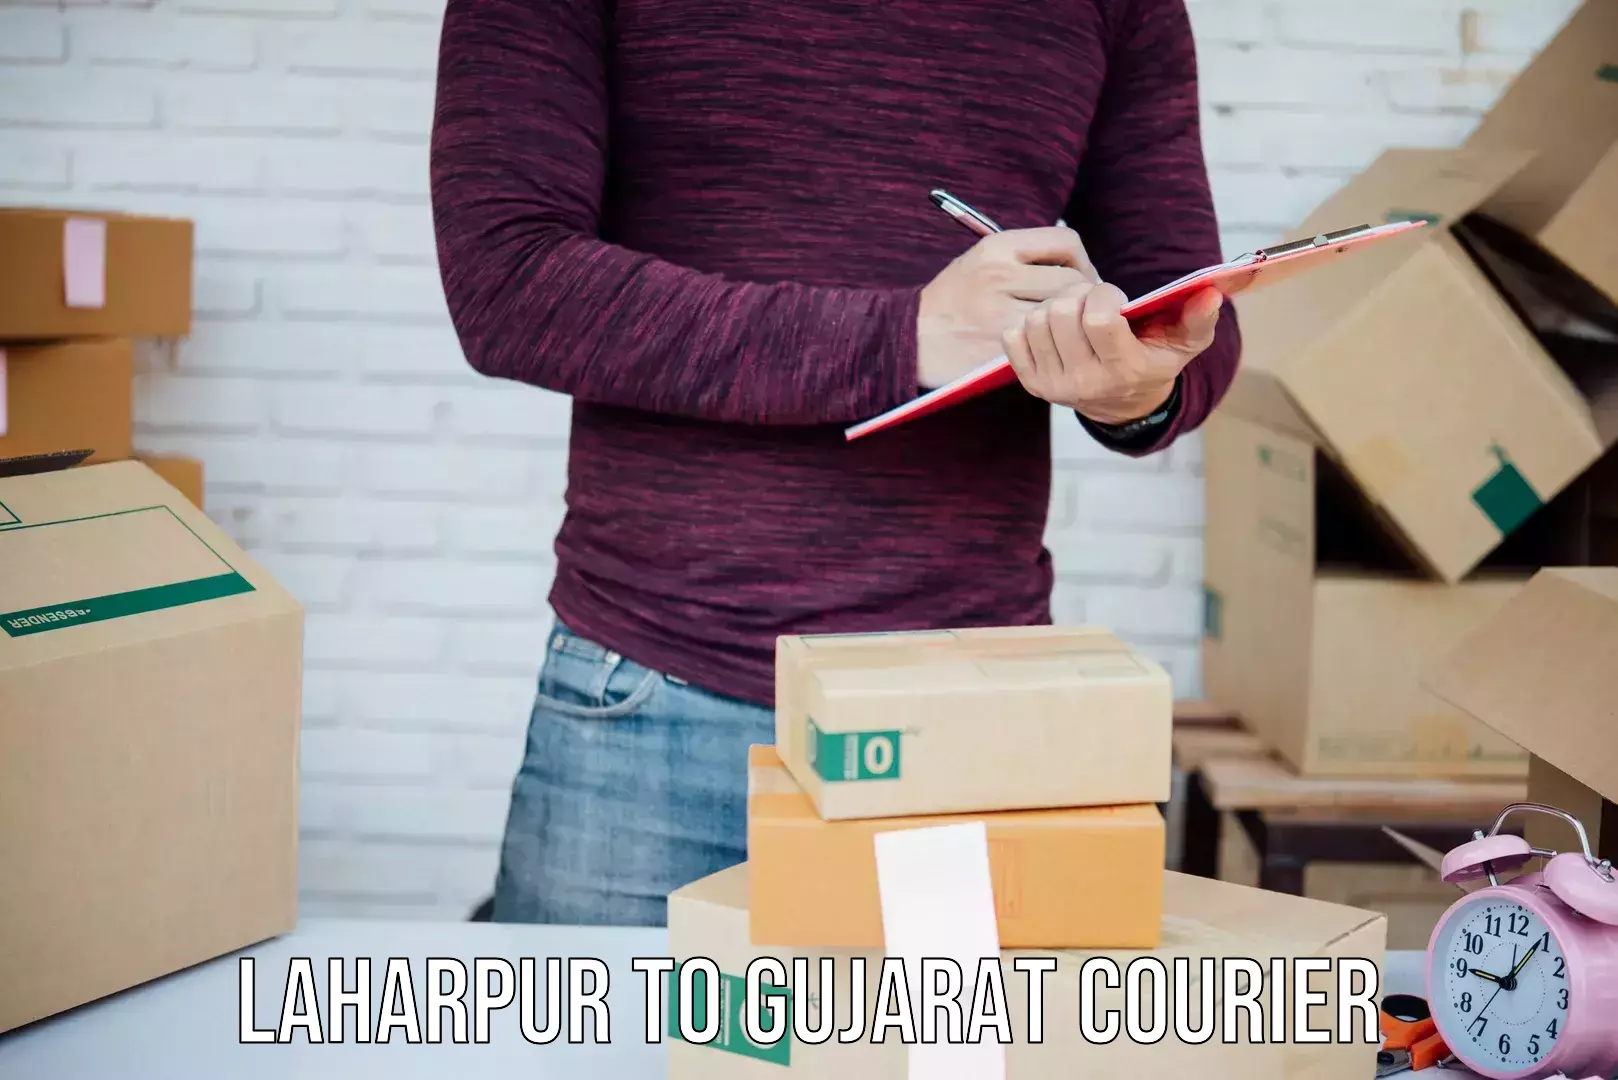 Customer-centric shipping Laharpur to Patan Gujarat